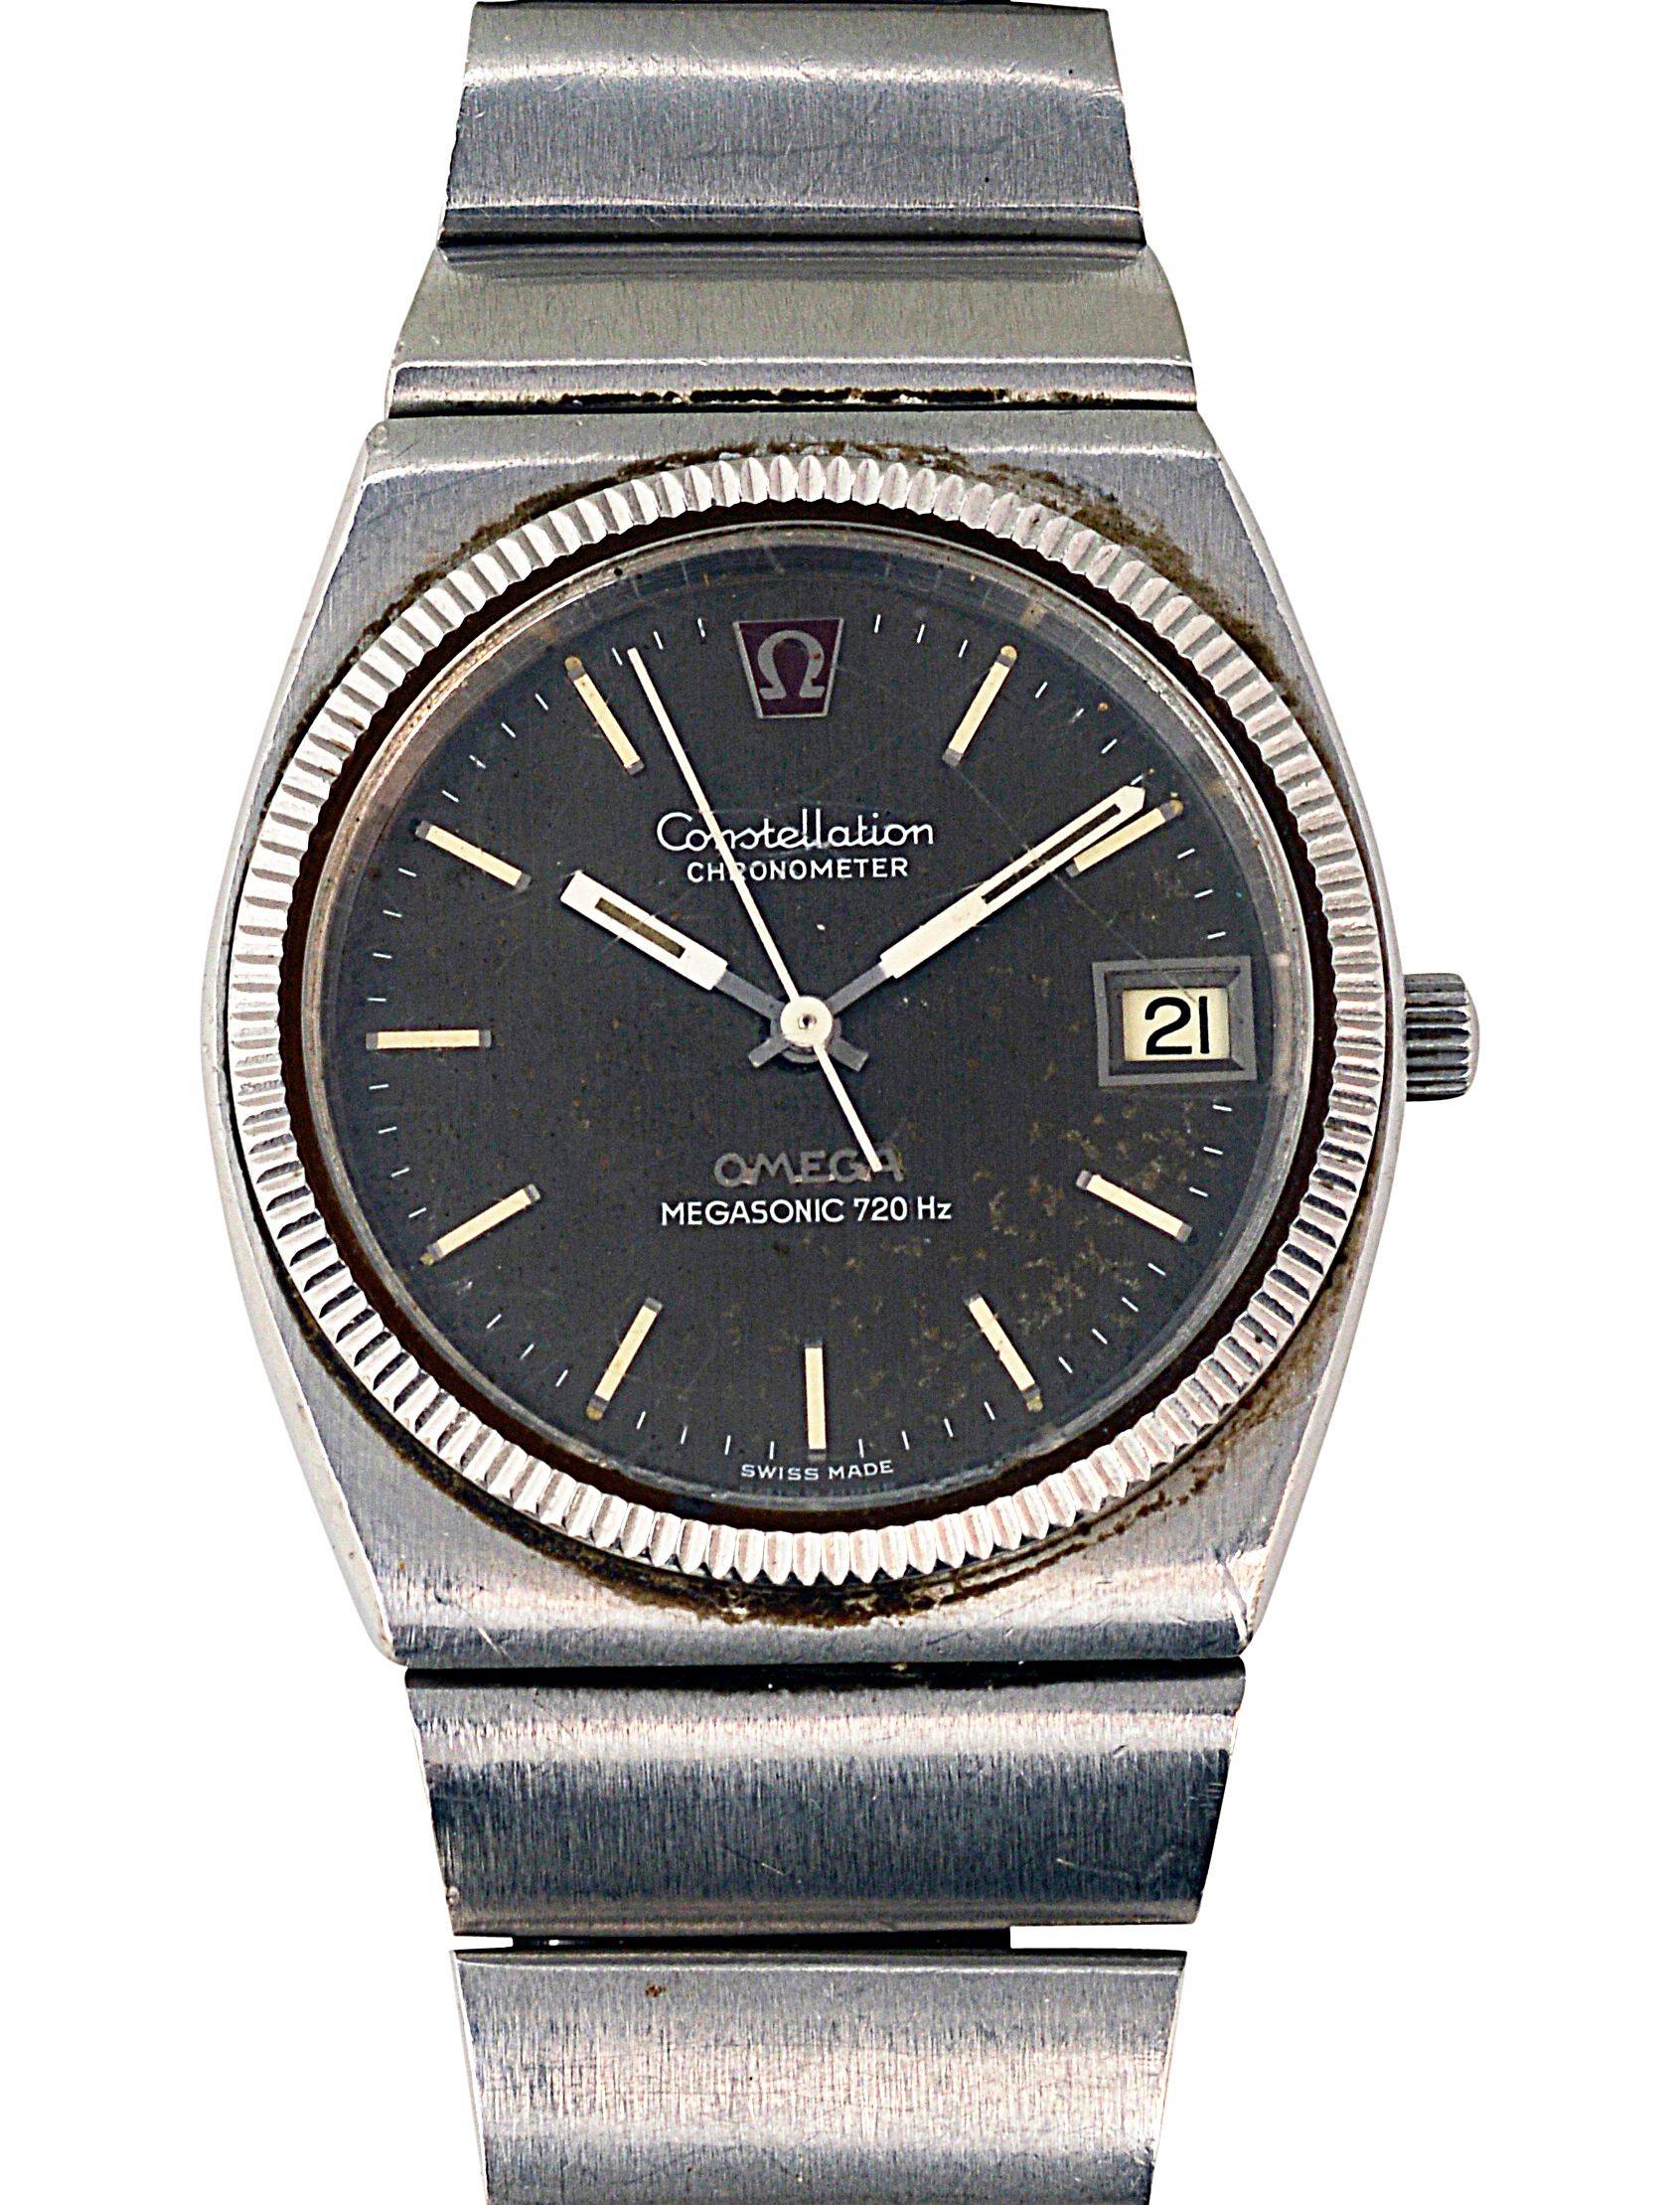 Omega Constellation Chronometer Megasonic stainless steel wristwatch - Image 2 of 2